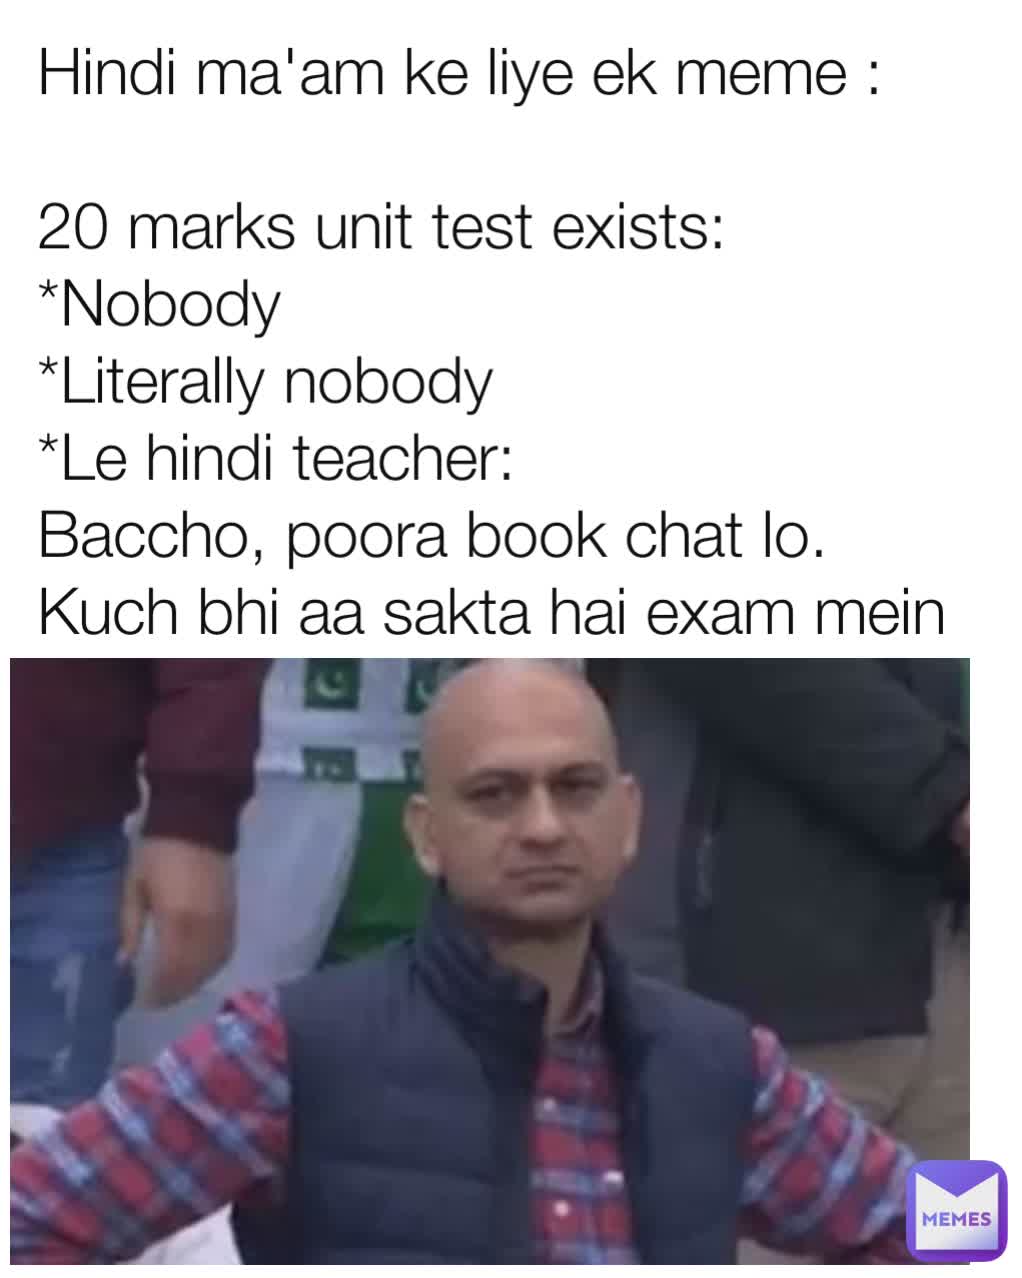 Hindi ma'am ke liye ek meme :

20 marks unit test exists:
*Nobody
*Literally nobody
*Le hindi teacher:
Baccho, poora book chat lo. Kuch bhi aa sakta hai exam mein